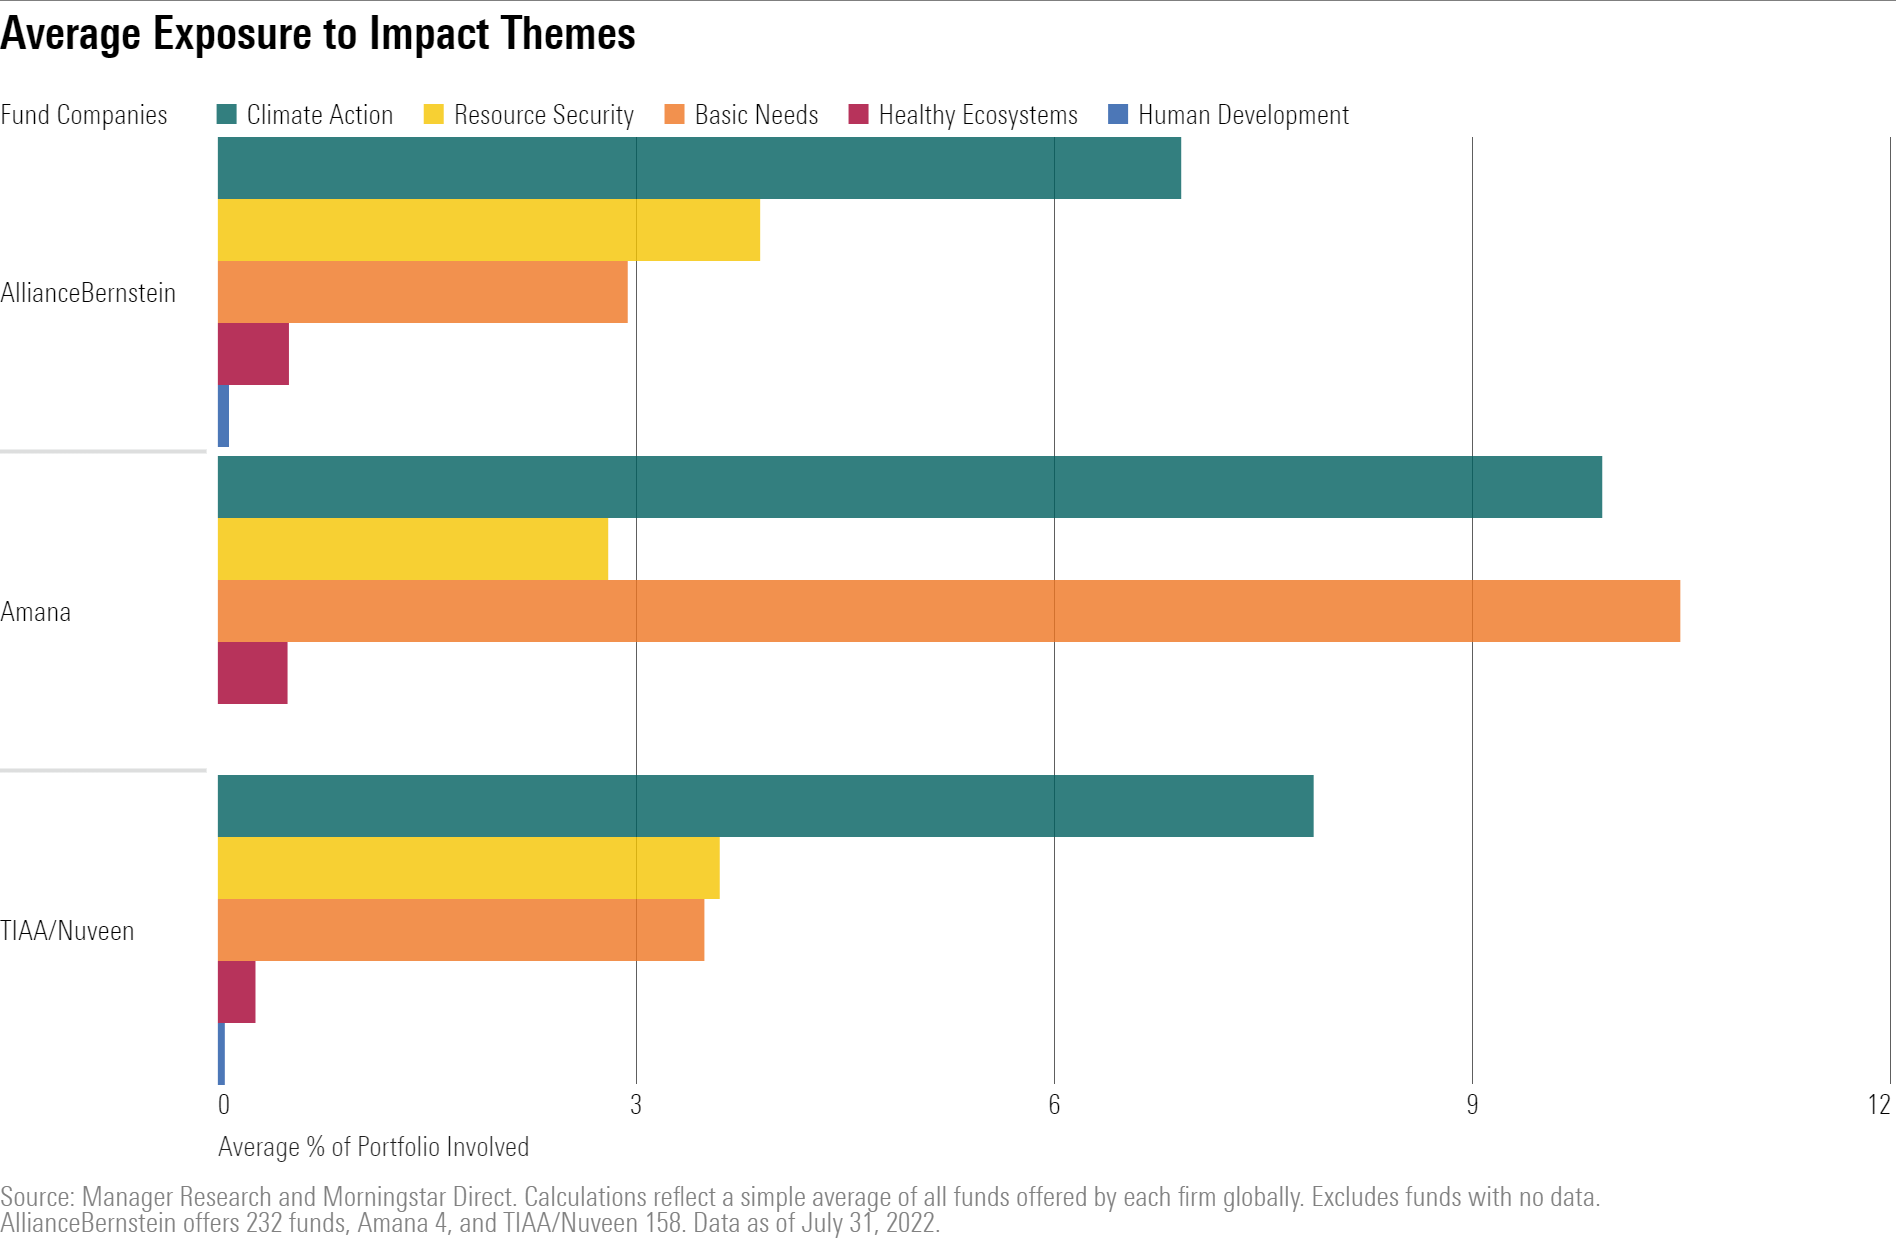 A horizontal bar chart illustrating the exposure to various impact themes for AllianceBernstein, Amana, and TIAA/Nuveen.